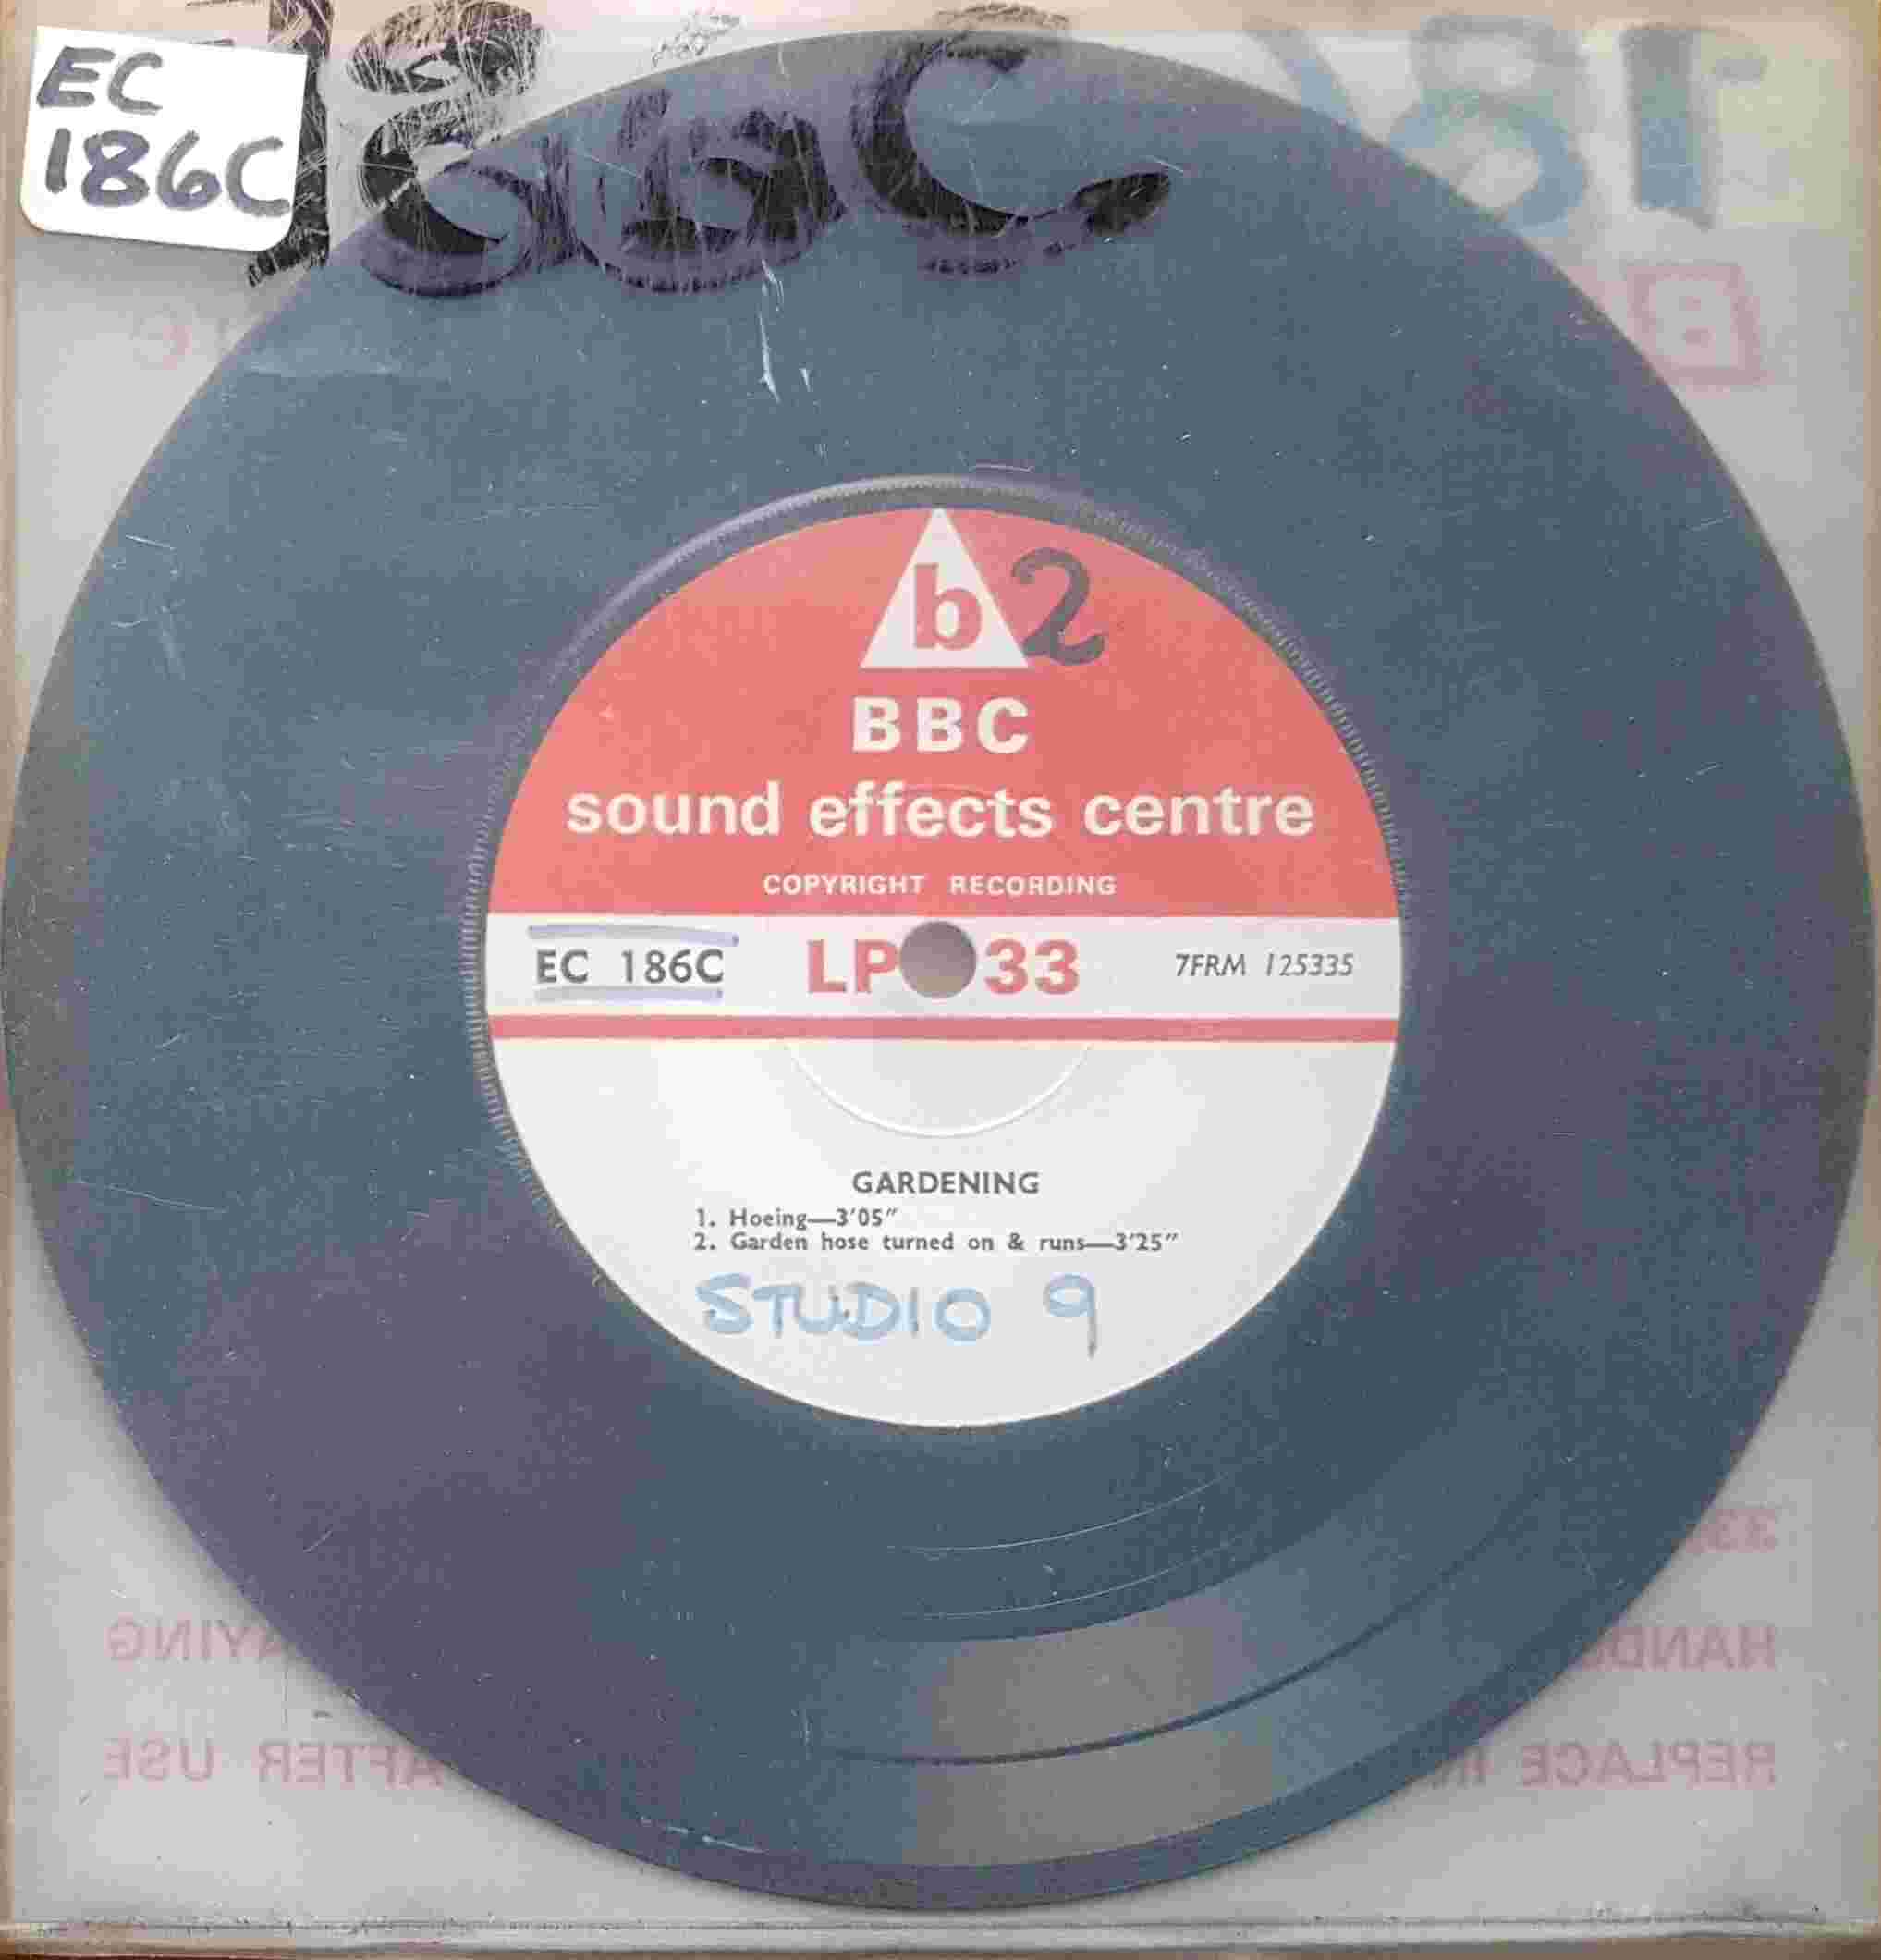 Back cover of EC 186C